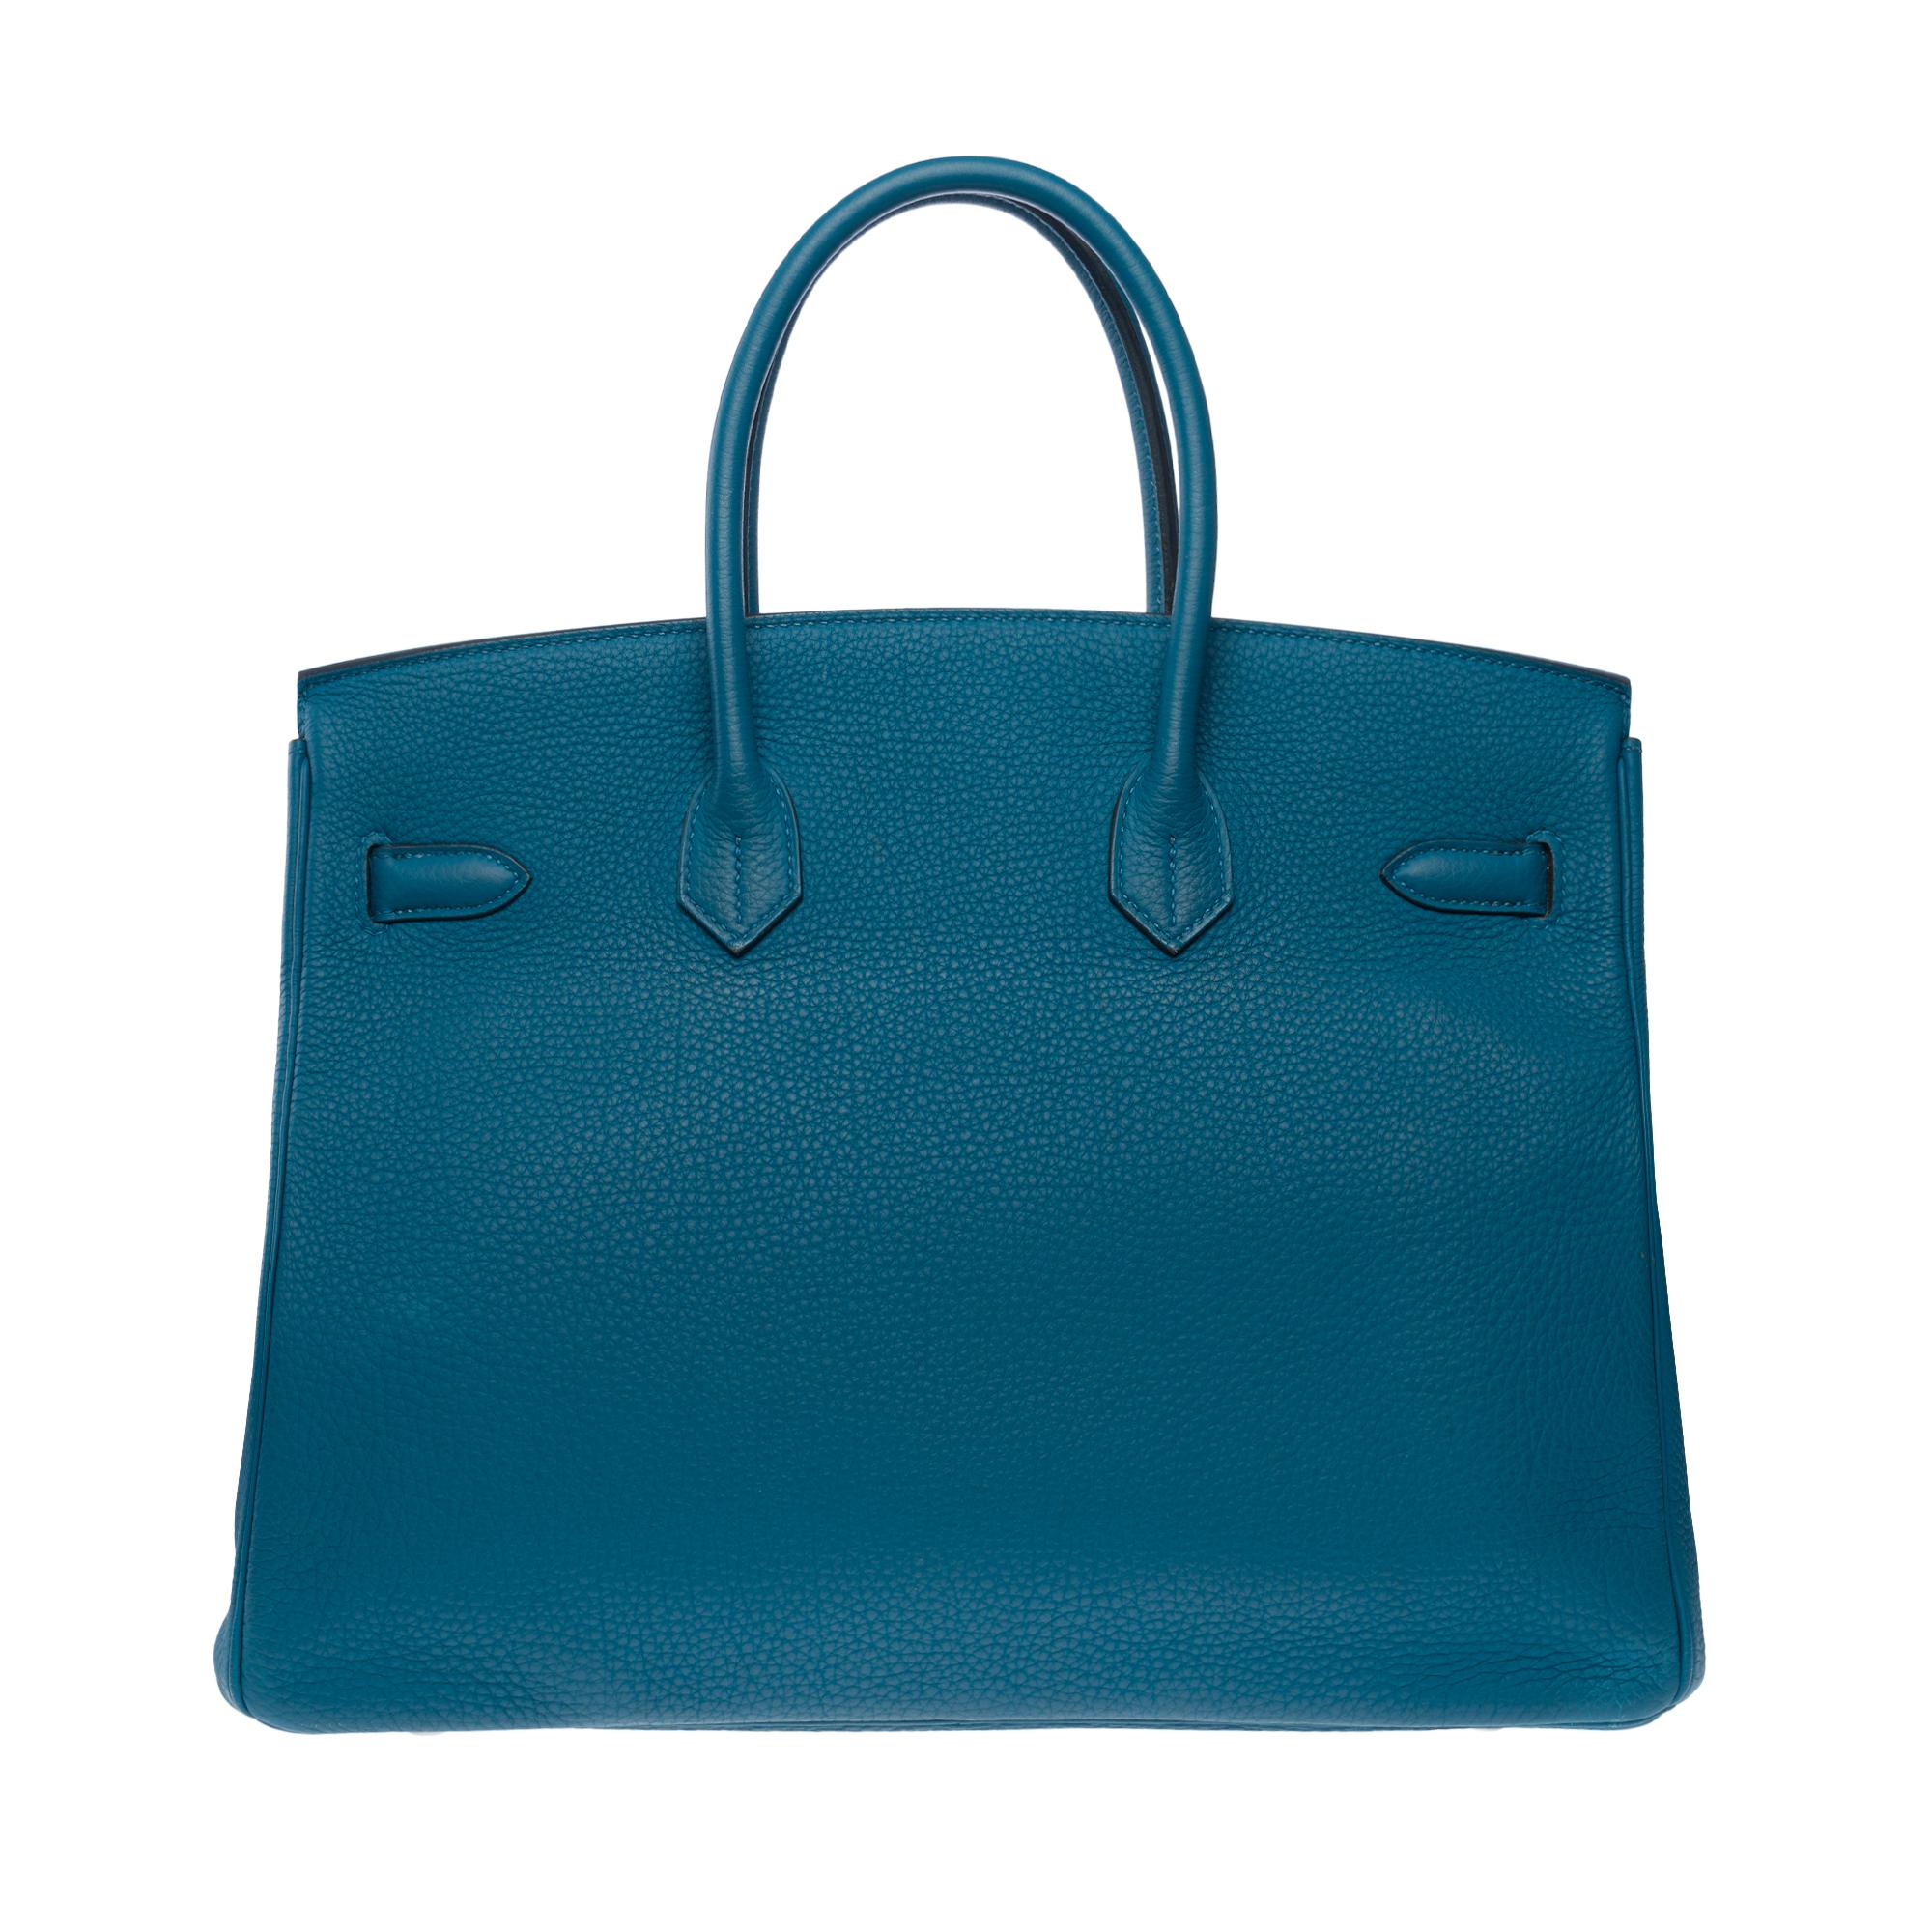 Women's or Men's Amazing Hermes Birkin 35 handbag in Bleu Colvert Togo leather, SHW For Sale